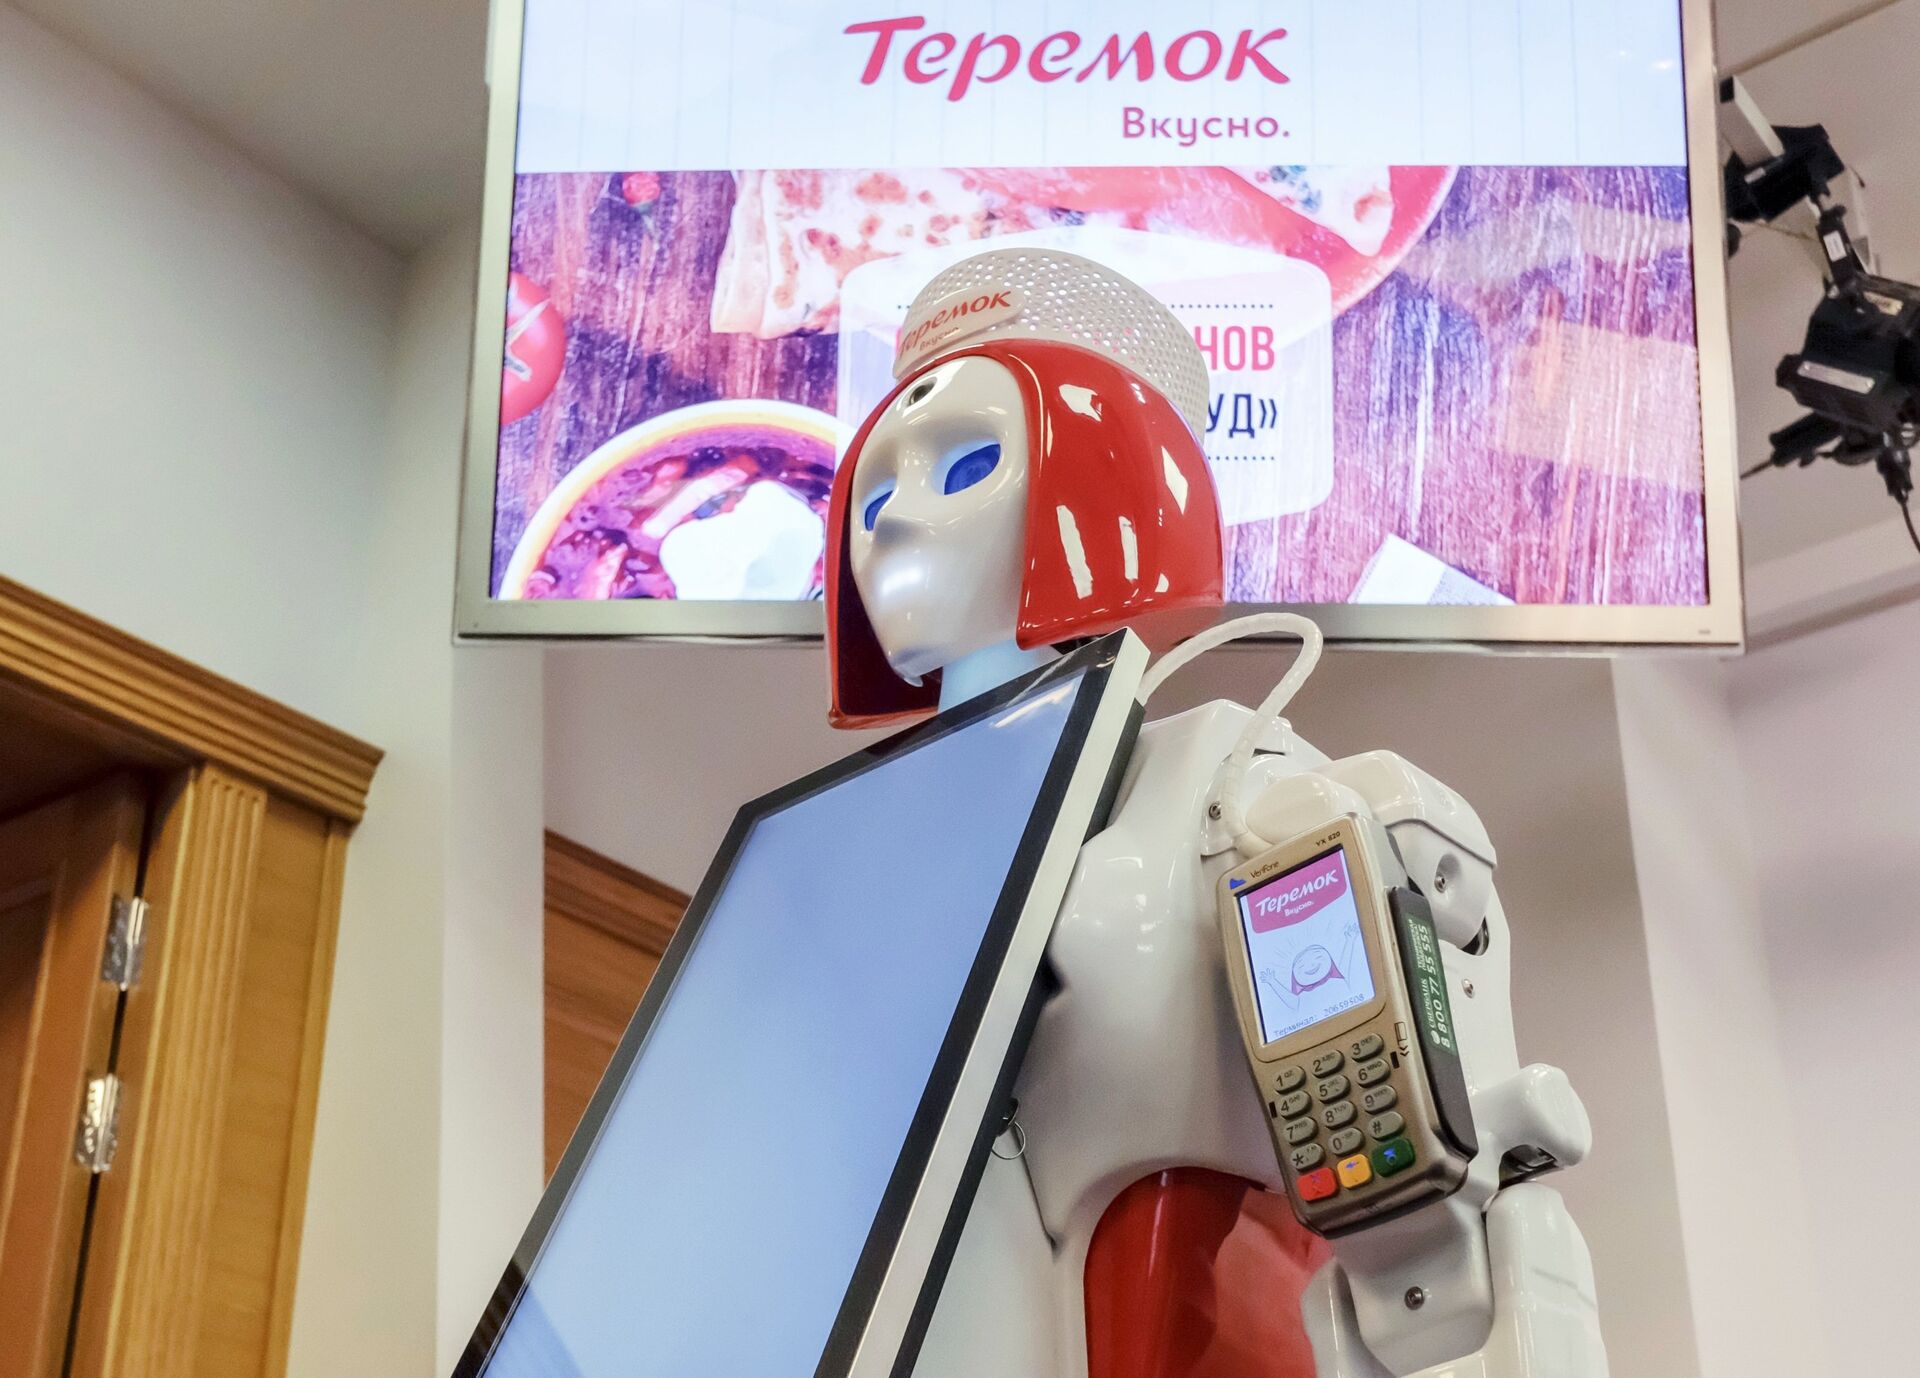 Презентация андроида-кассира Маруся для сети ресторанов Теремок - ПРАЙМ, 1920, 21.04.2021